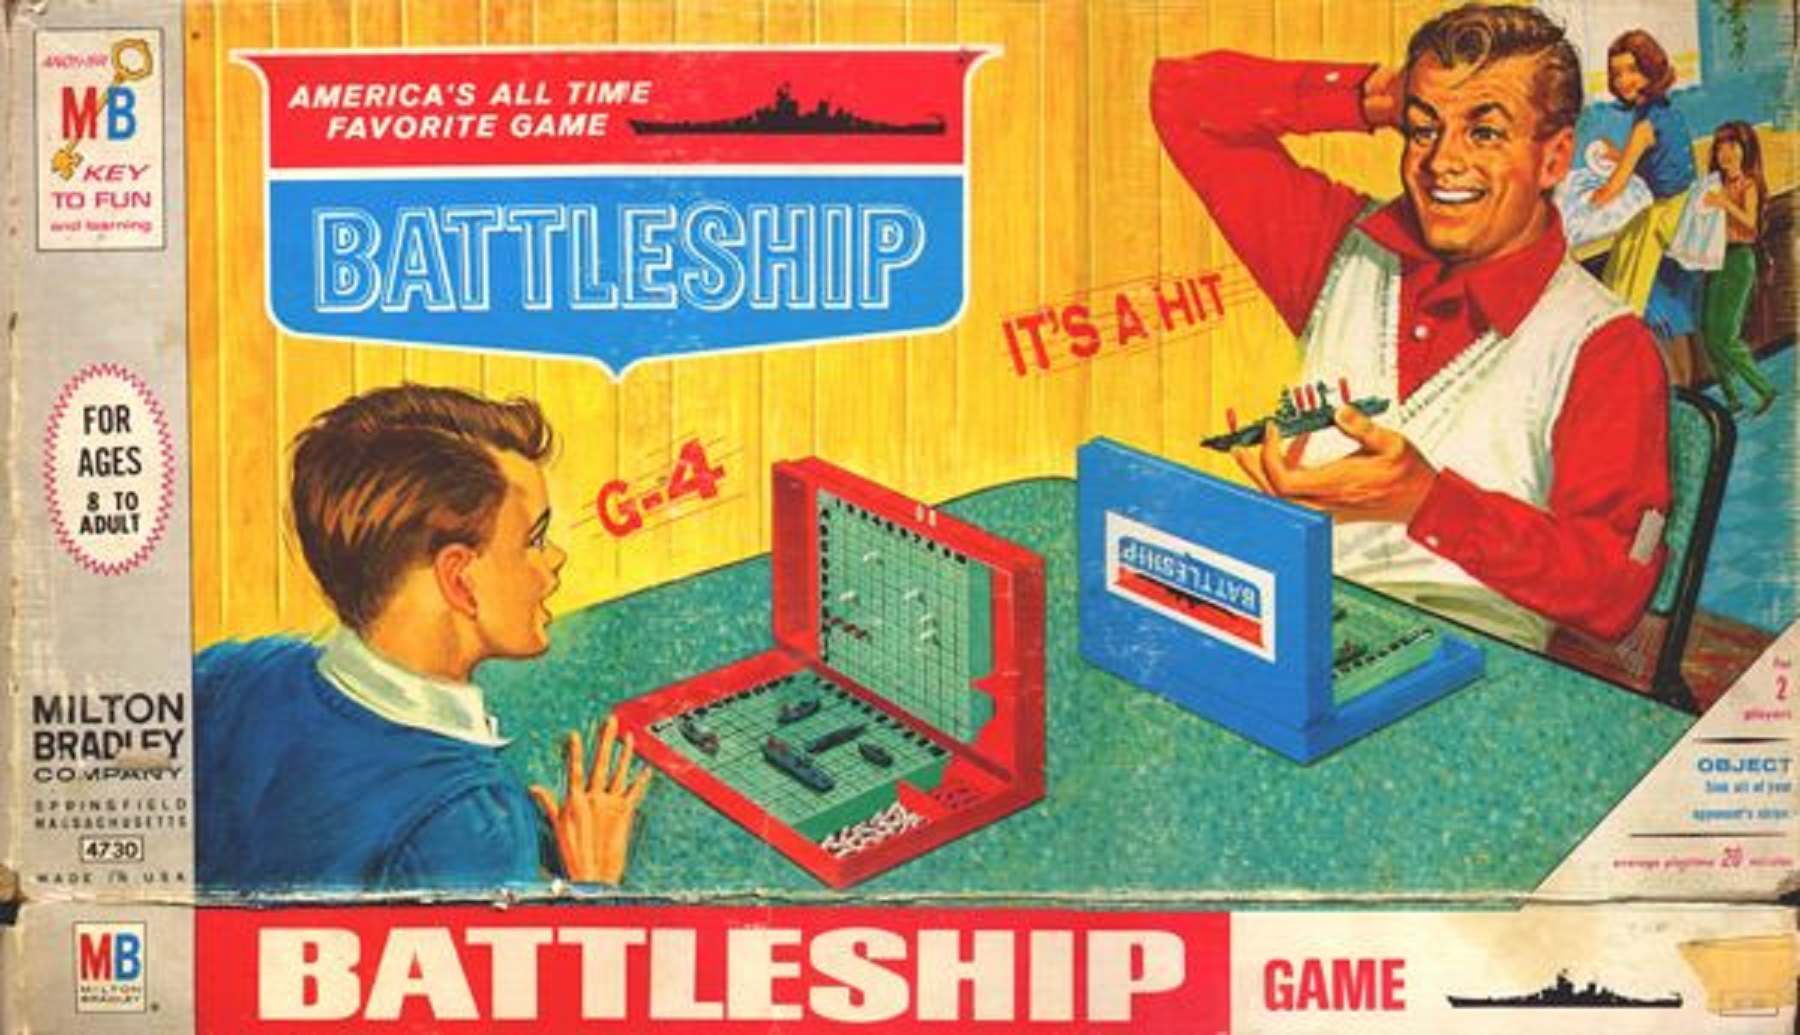 battleship1.jpg